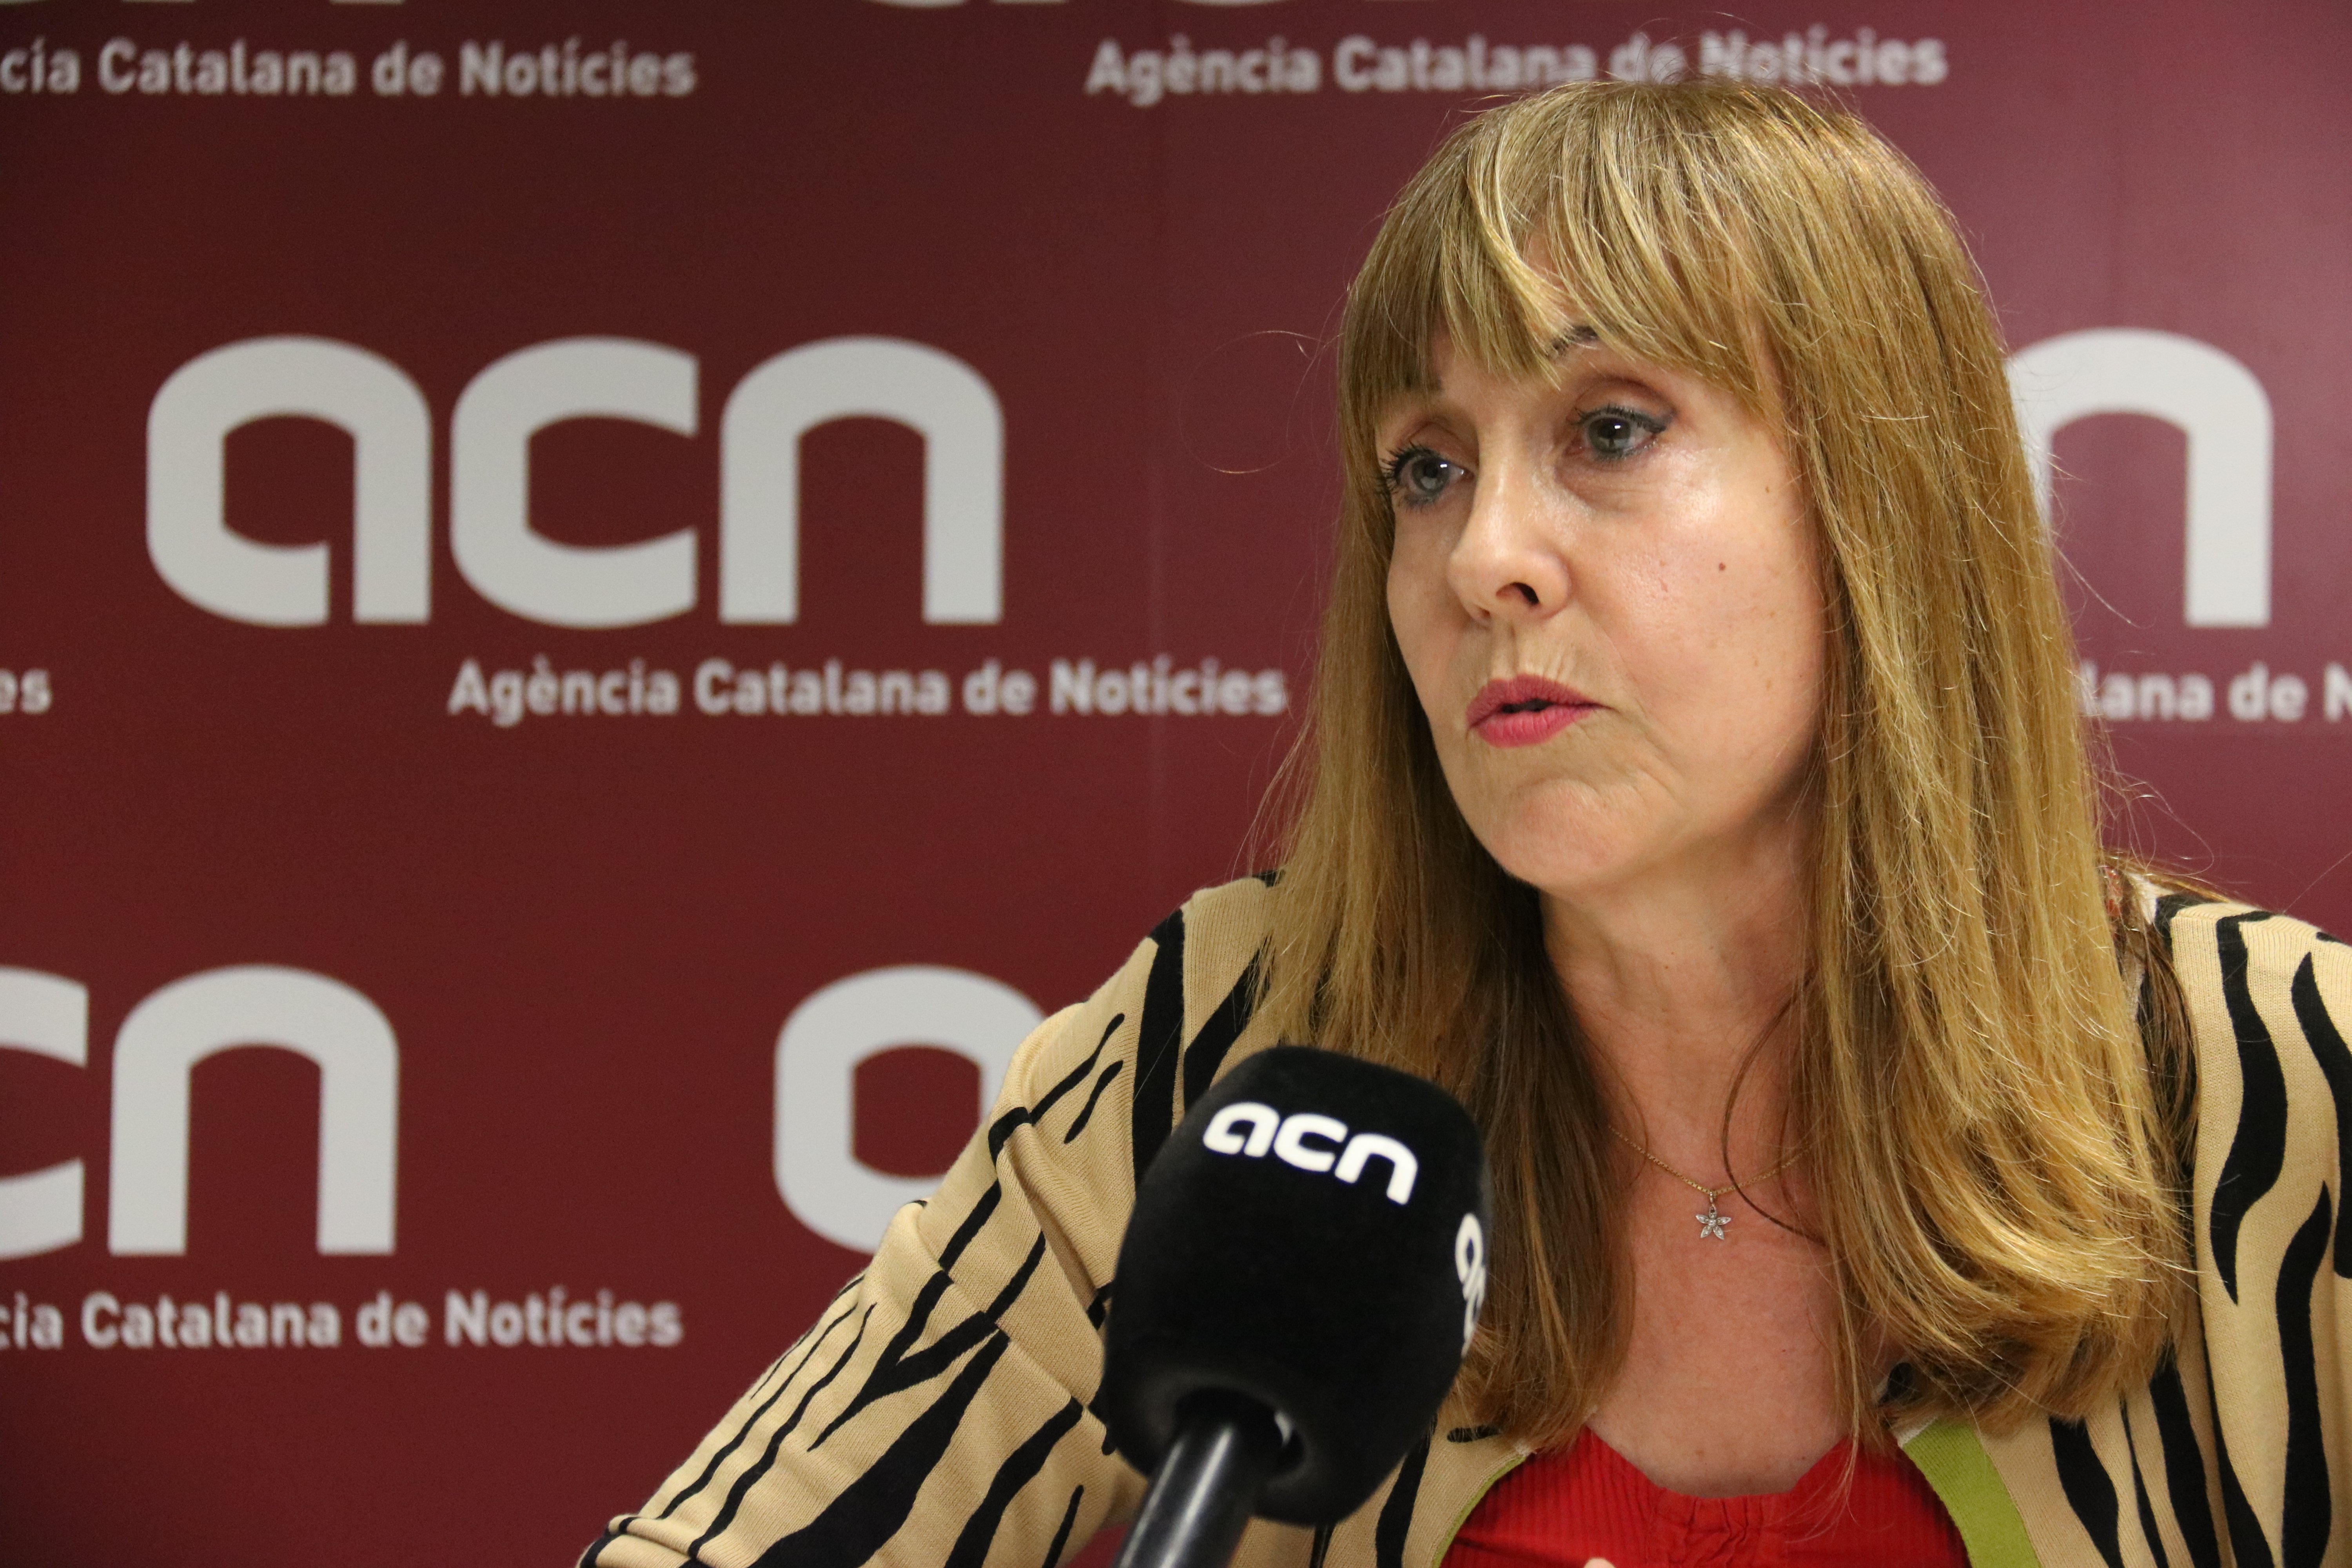 Eurodiputada de Cs avisa de que Catalunya "ha despreciado" la fuerza del Estado